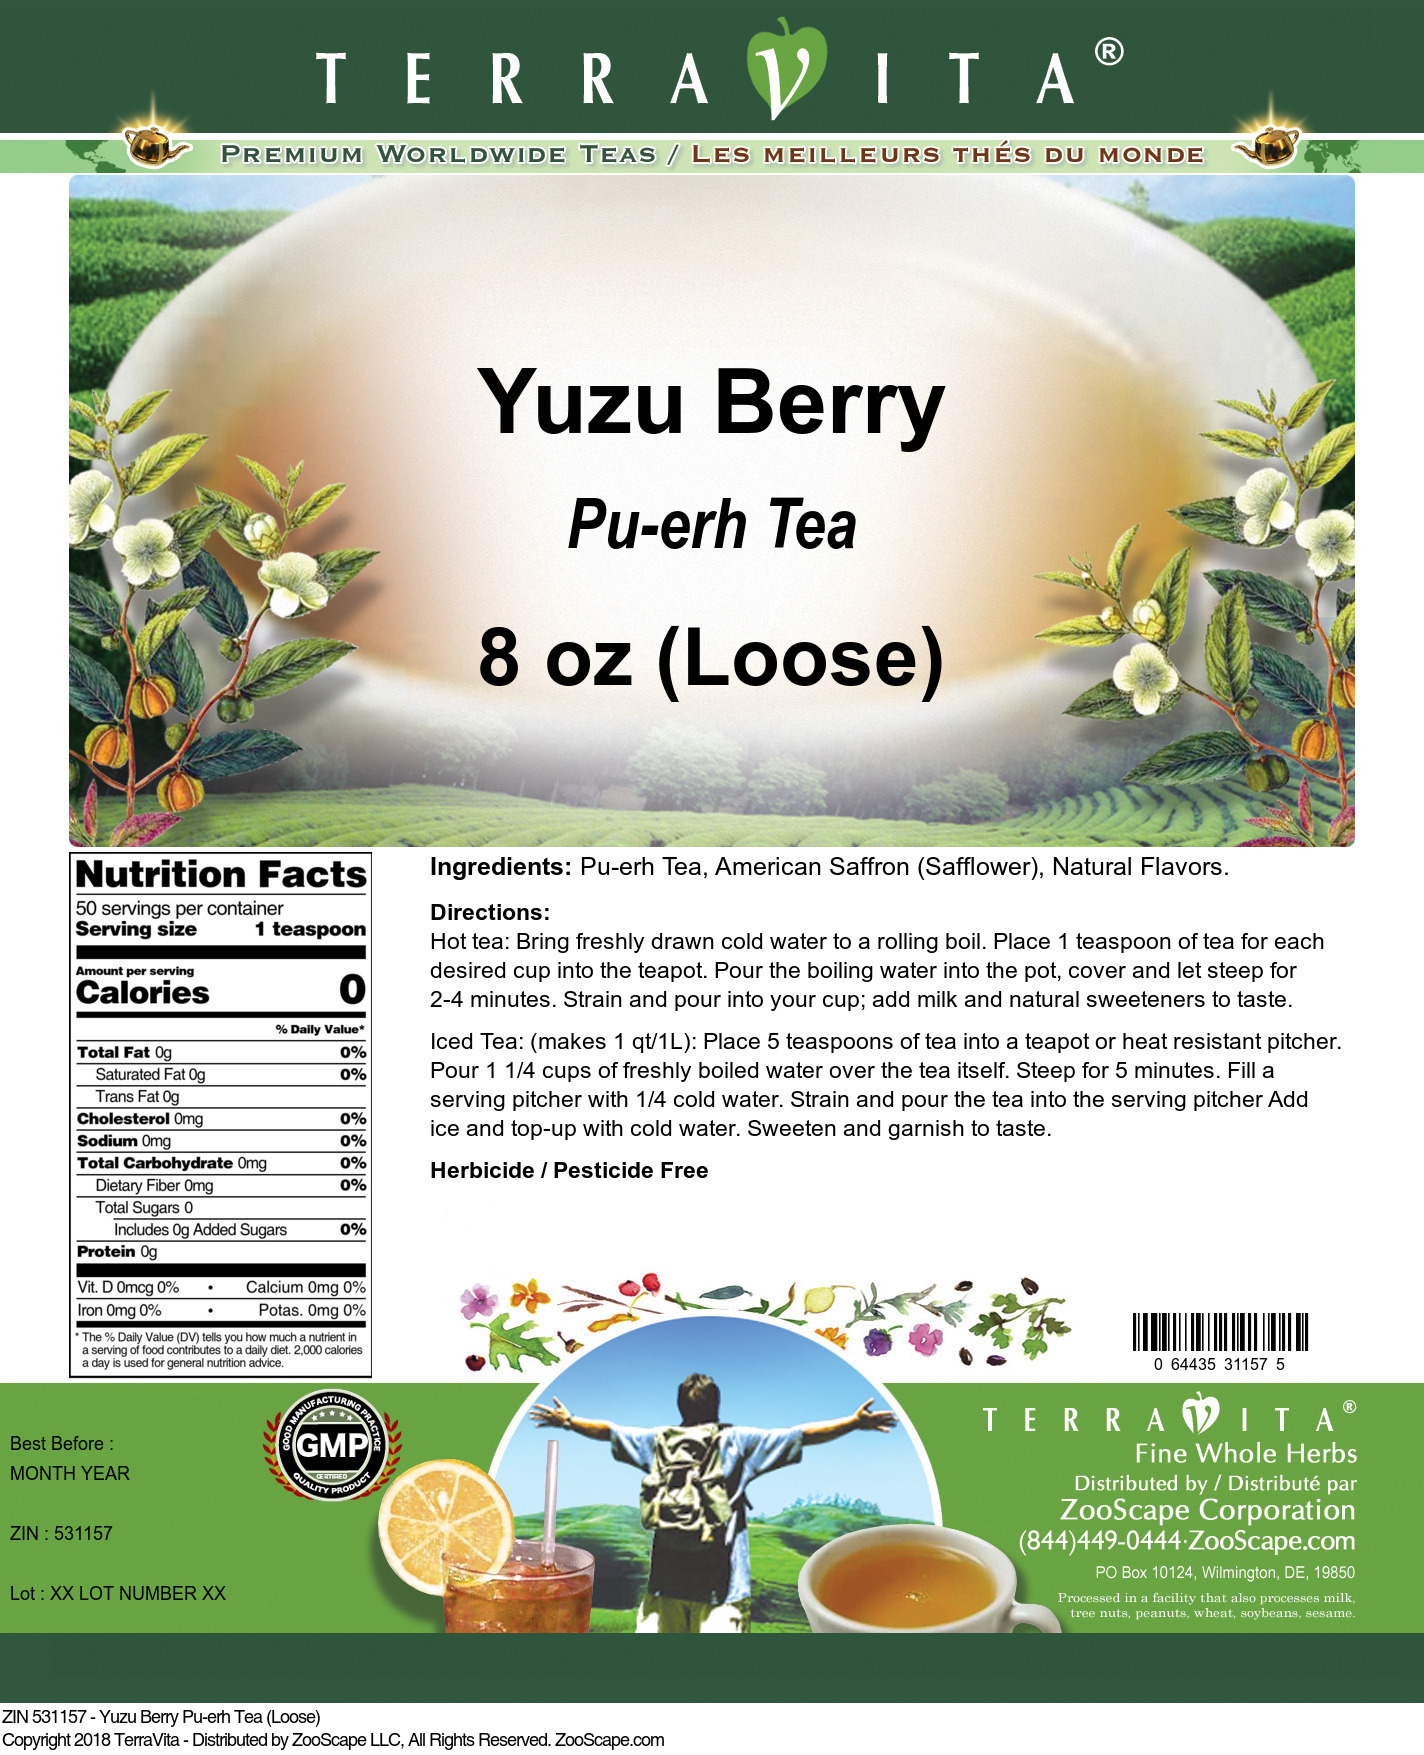 Yuzu Berry Pu-erh Tea (Loose) - Label